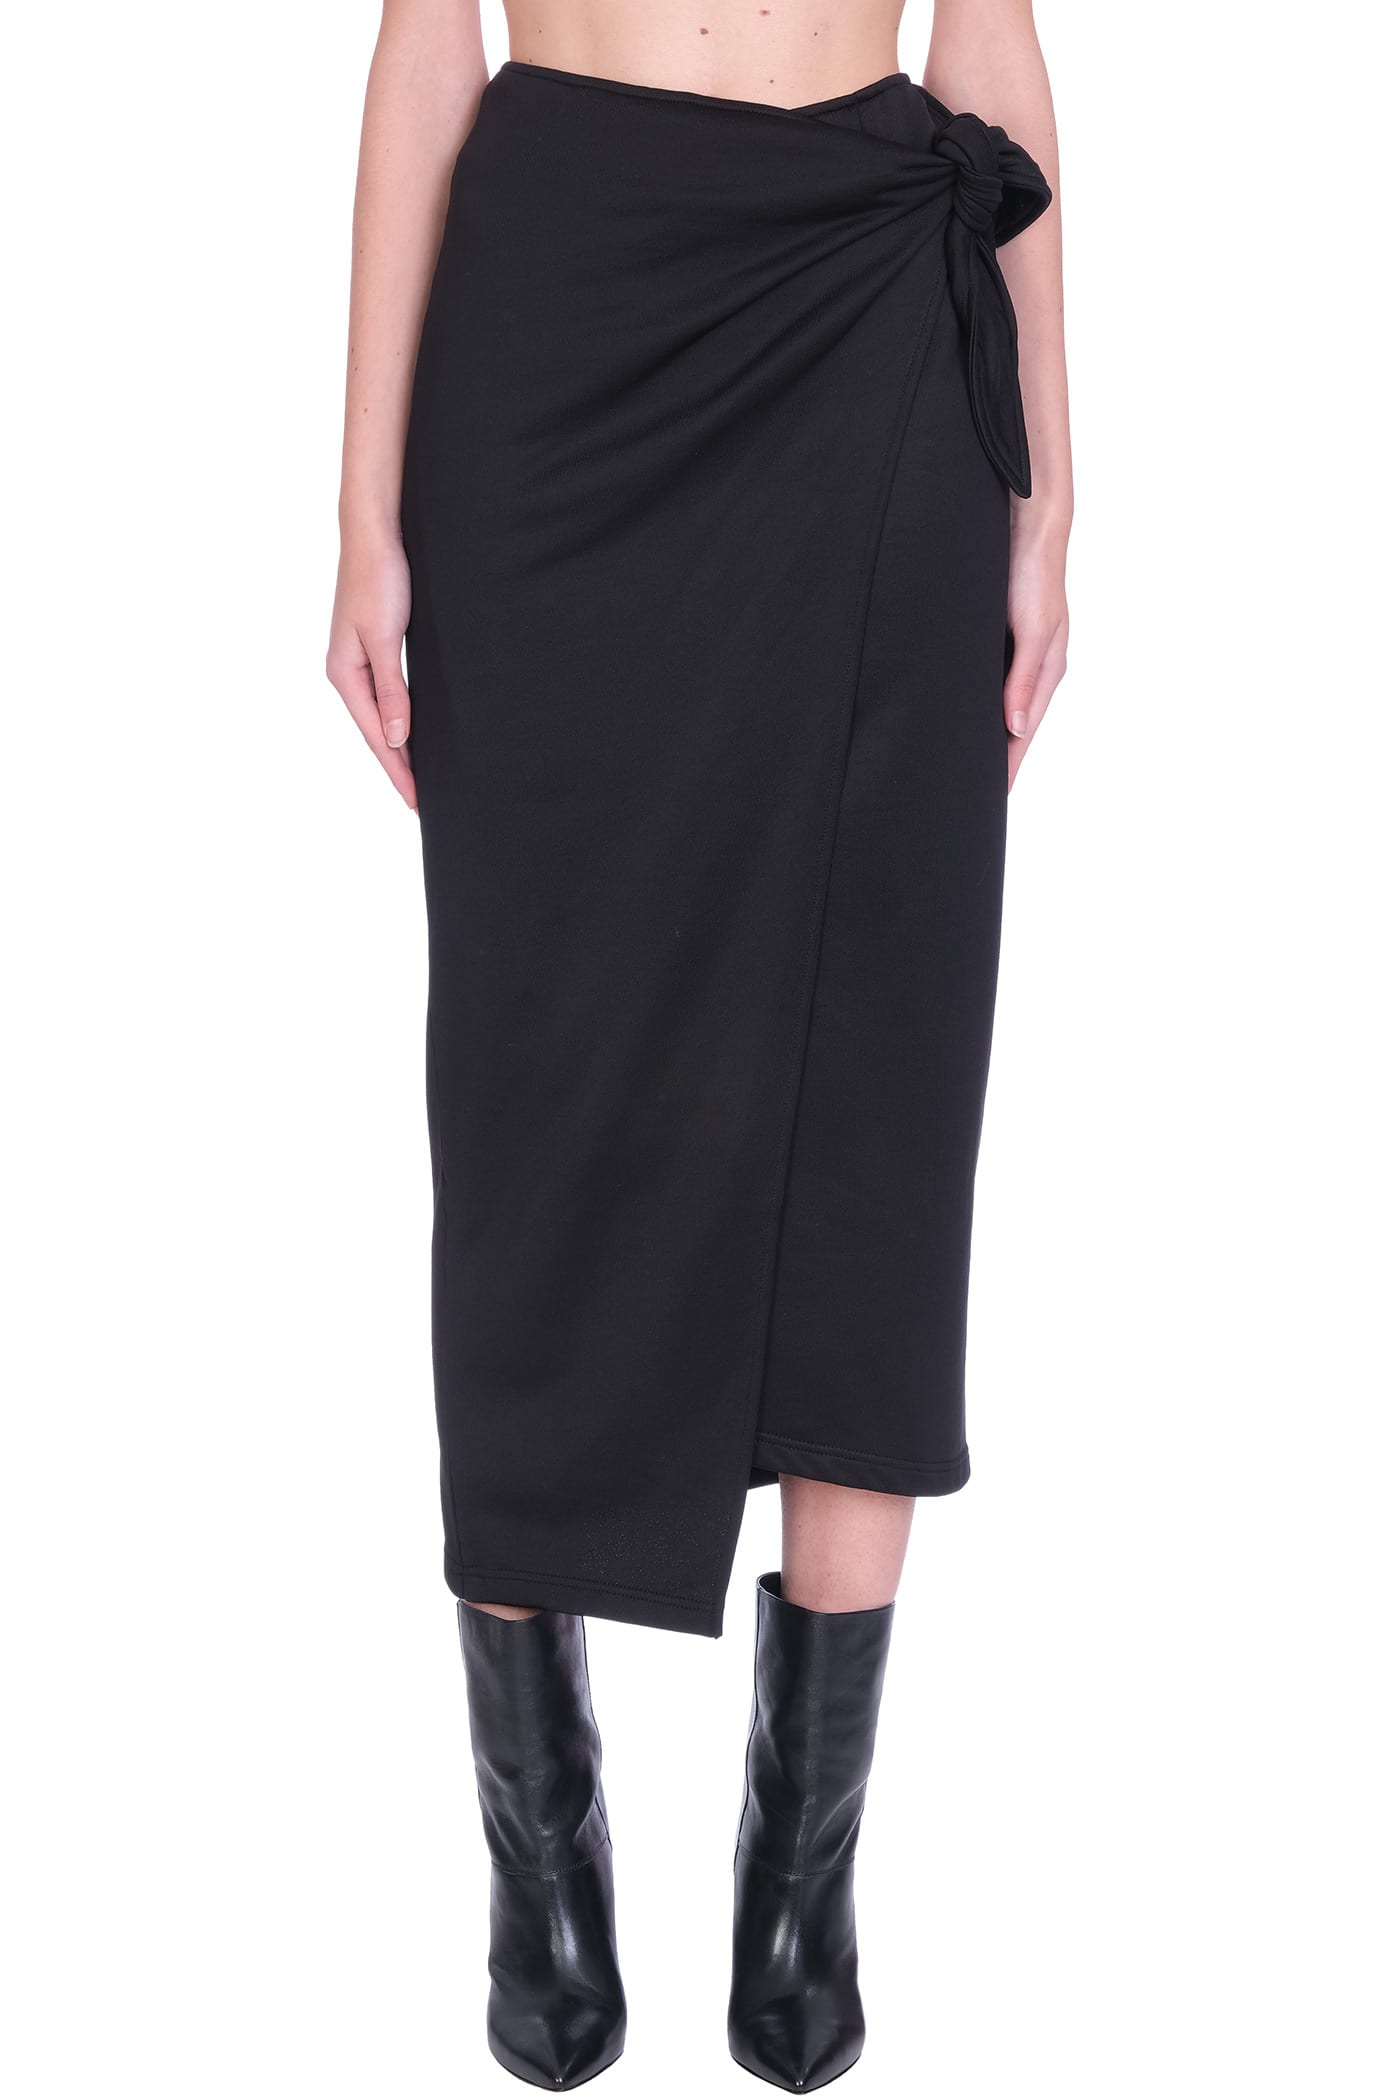 Isabel Marant Étoile isilde skirt in black cotton